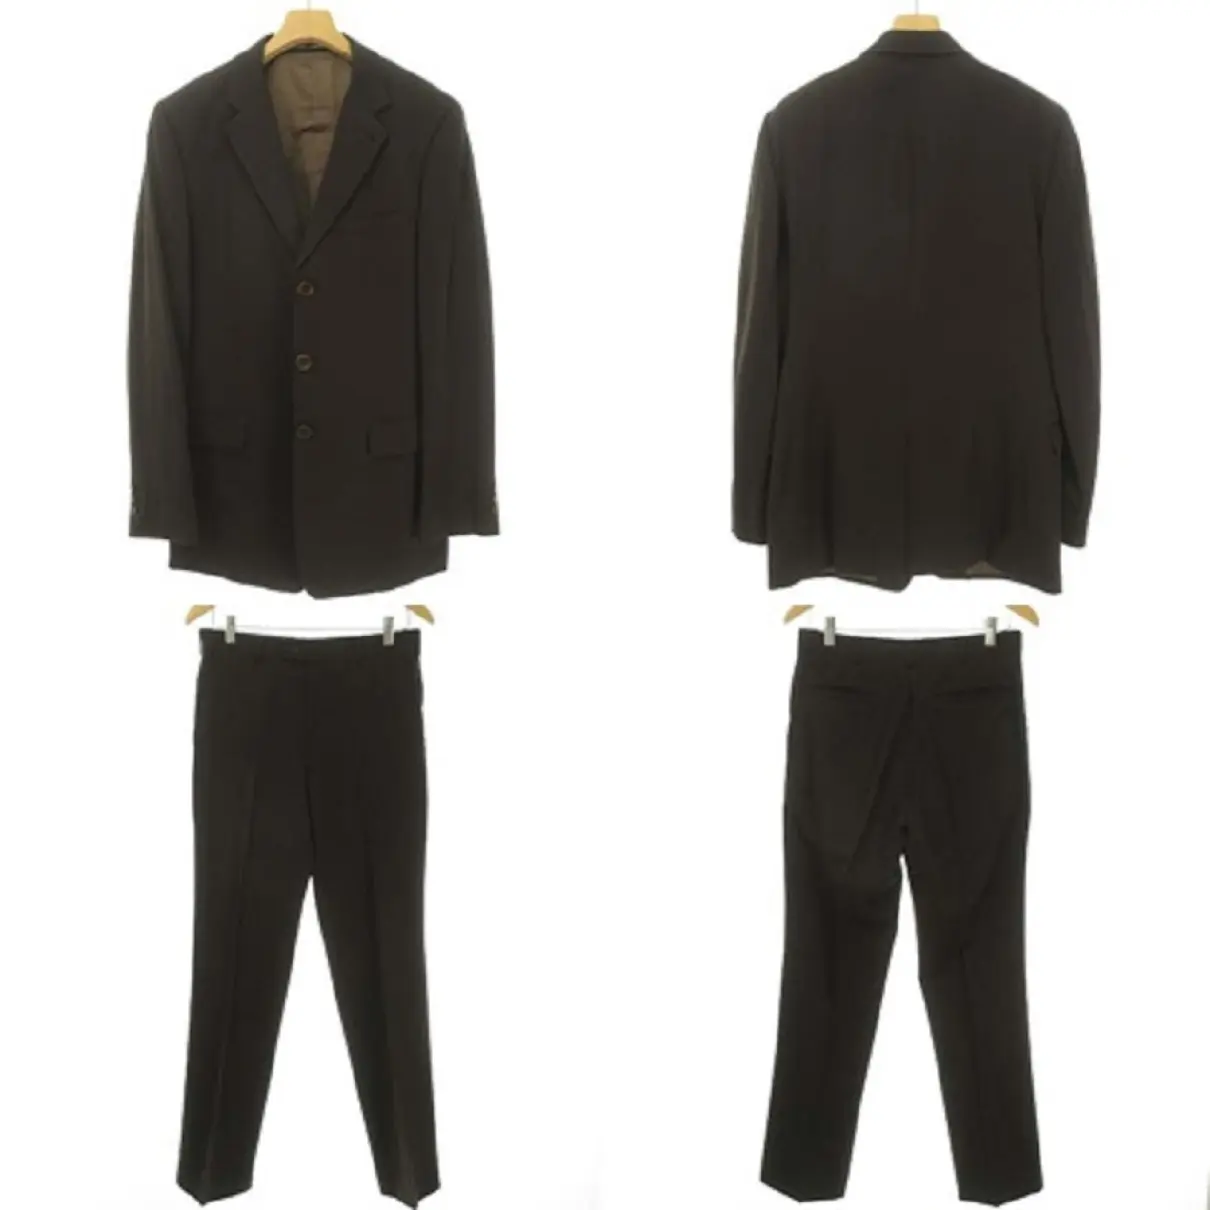 Buy Jean Paul Gaultier Wool suit online